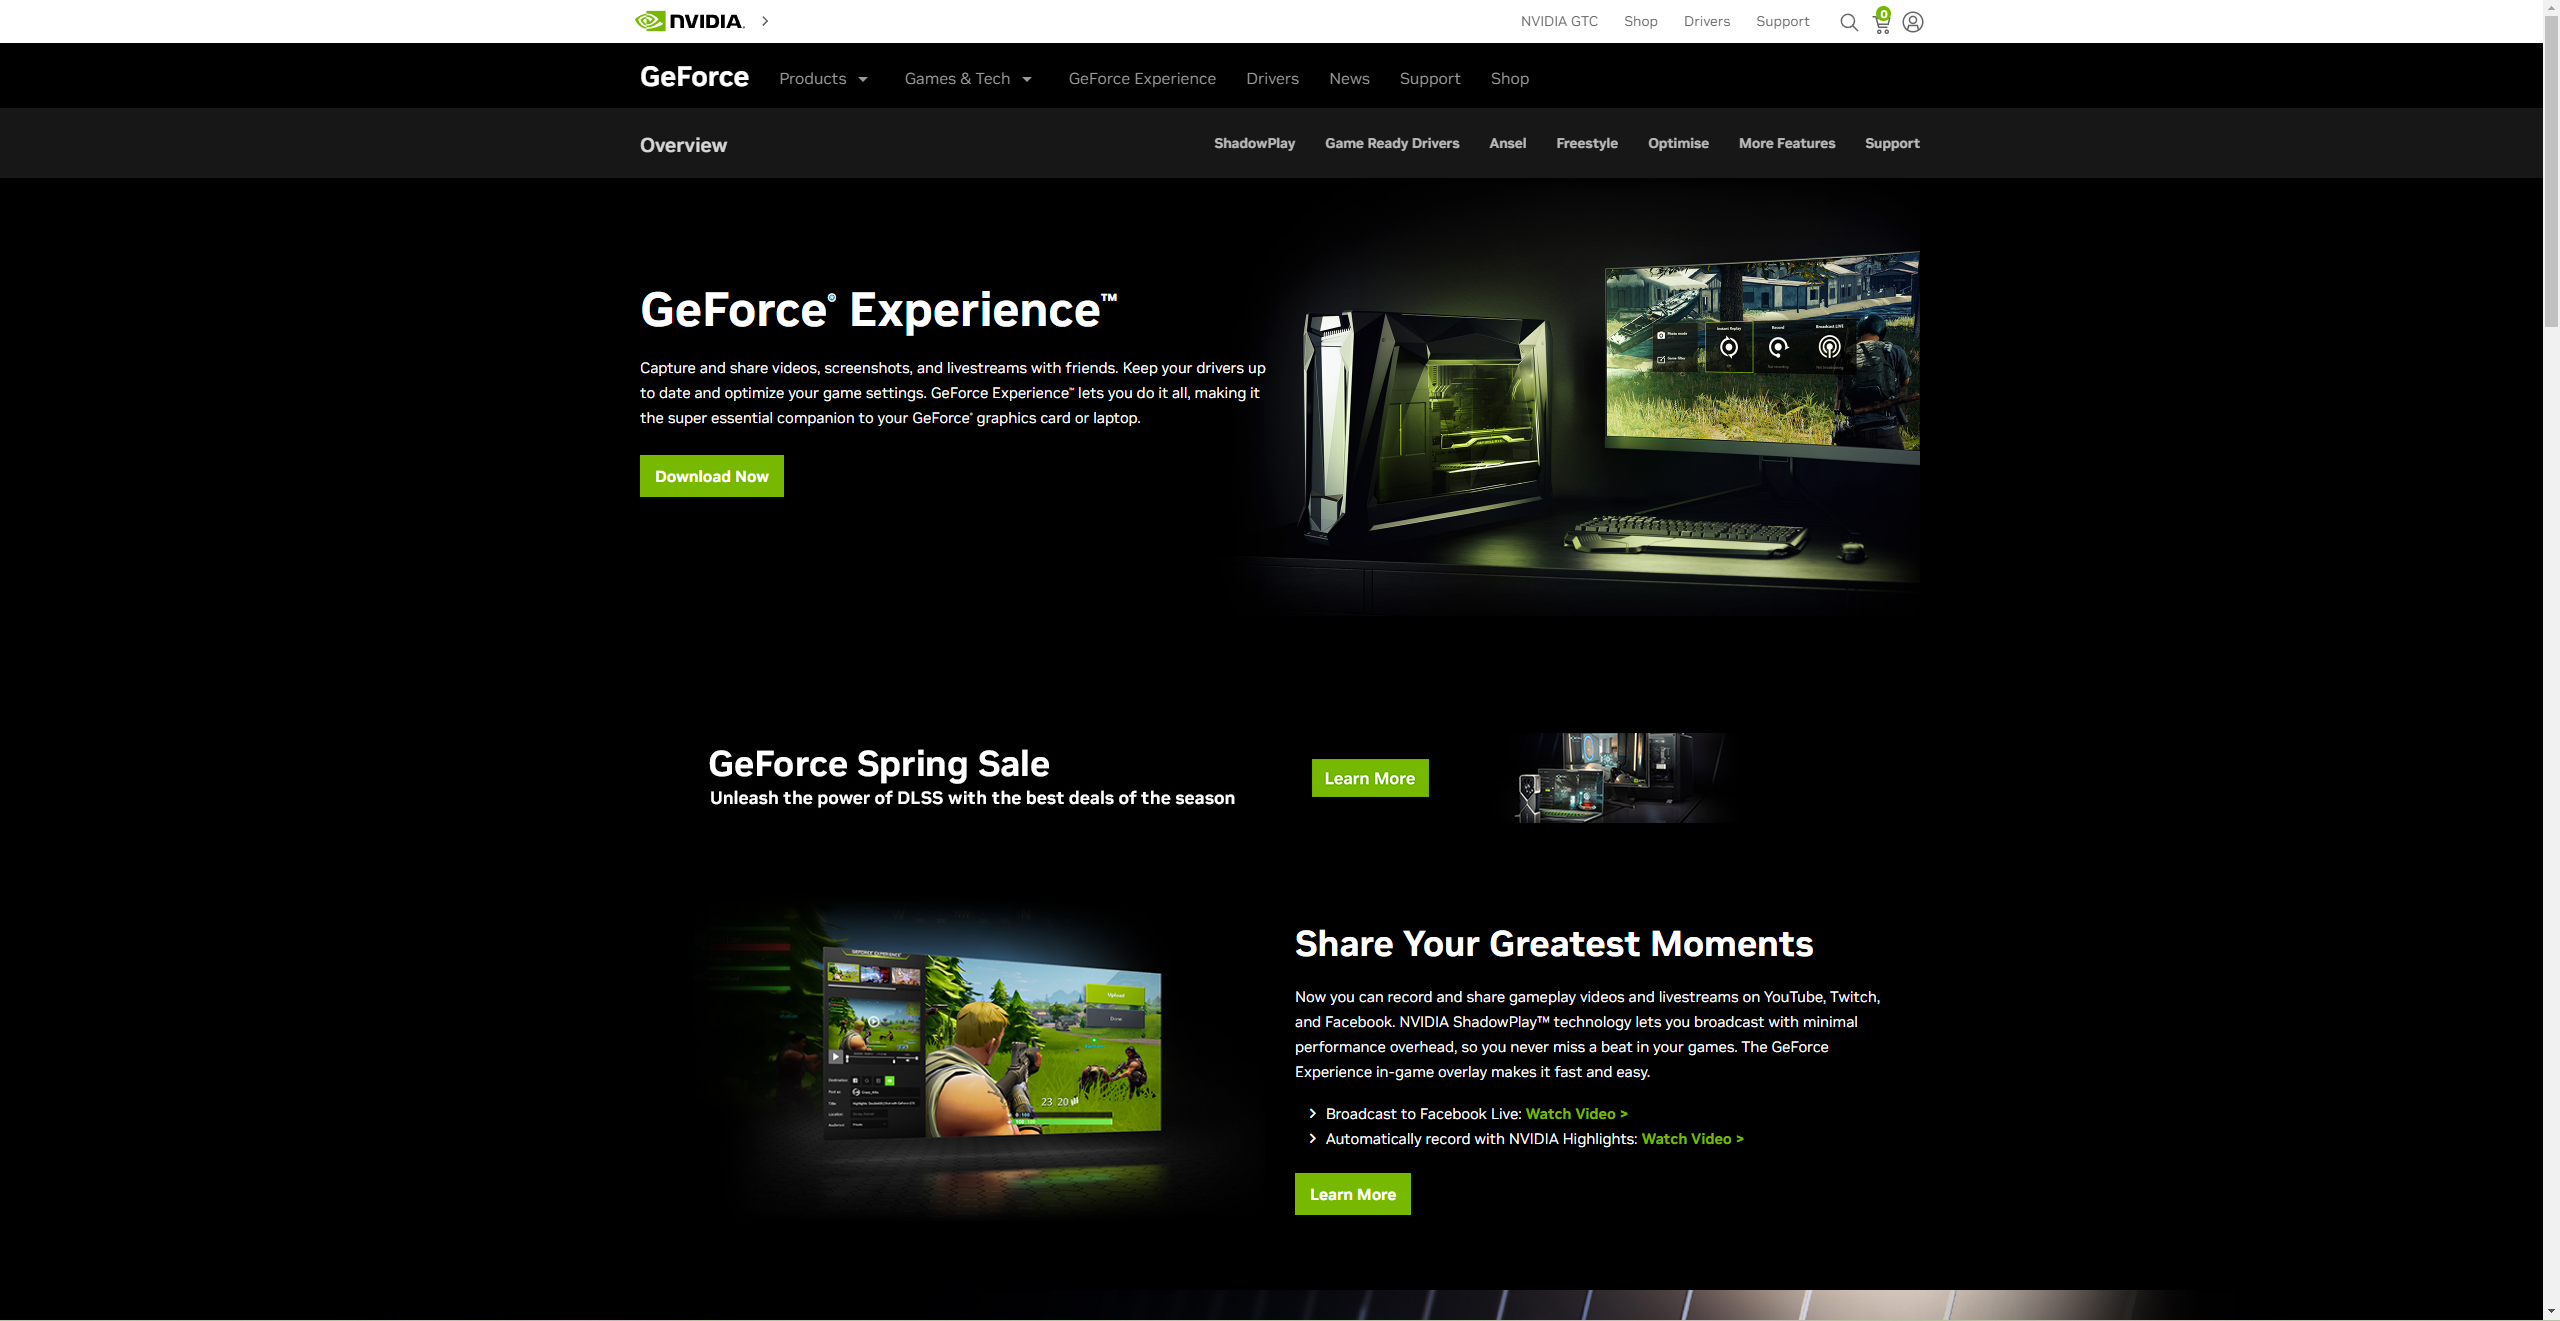 Die Nvidia GeForce Experience-Seite